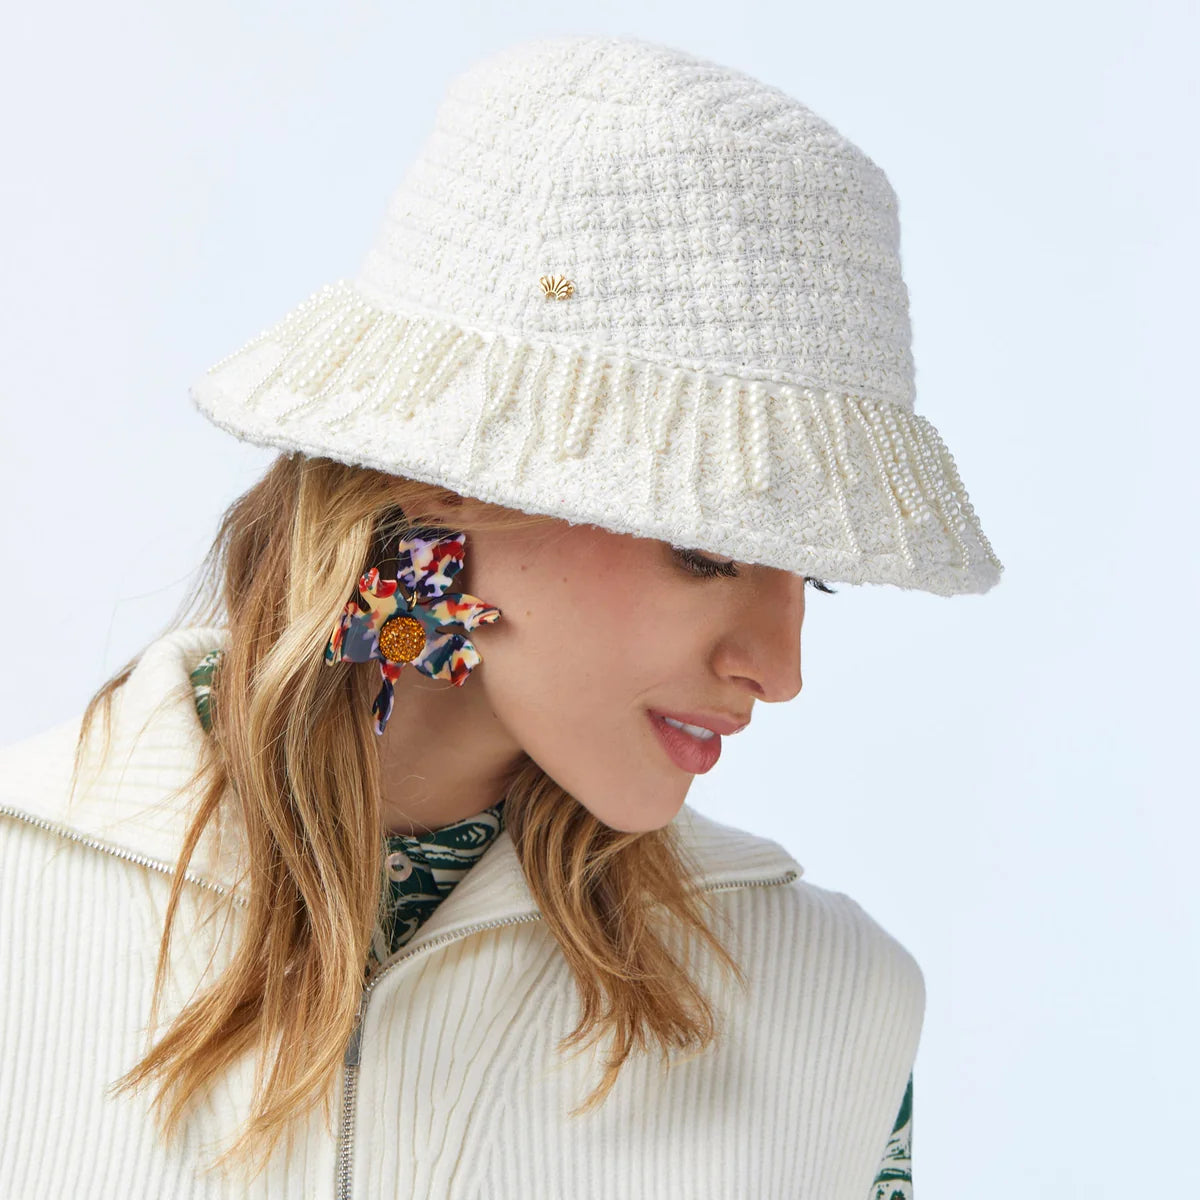 Lele Sadoughi Drippy Pearl Bucket Hat in Ivory